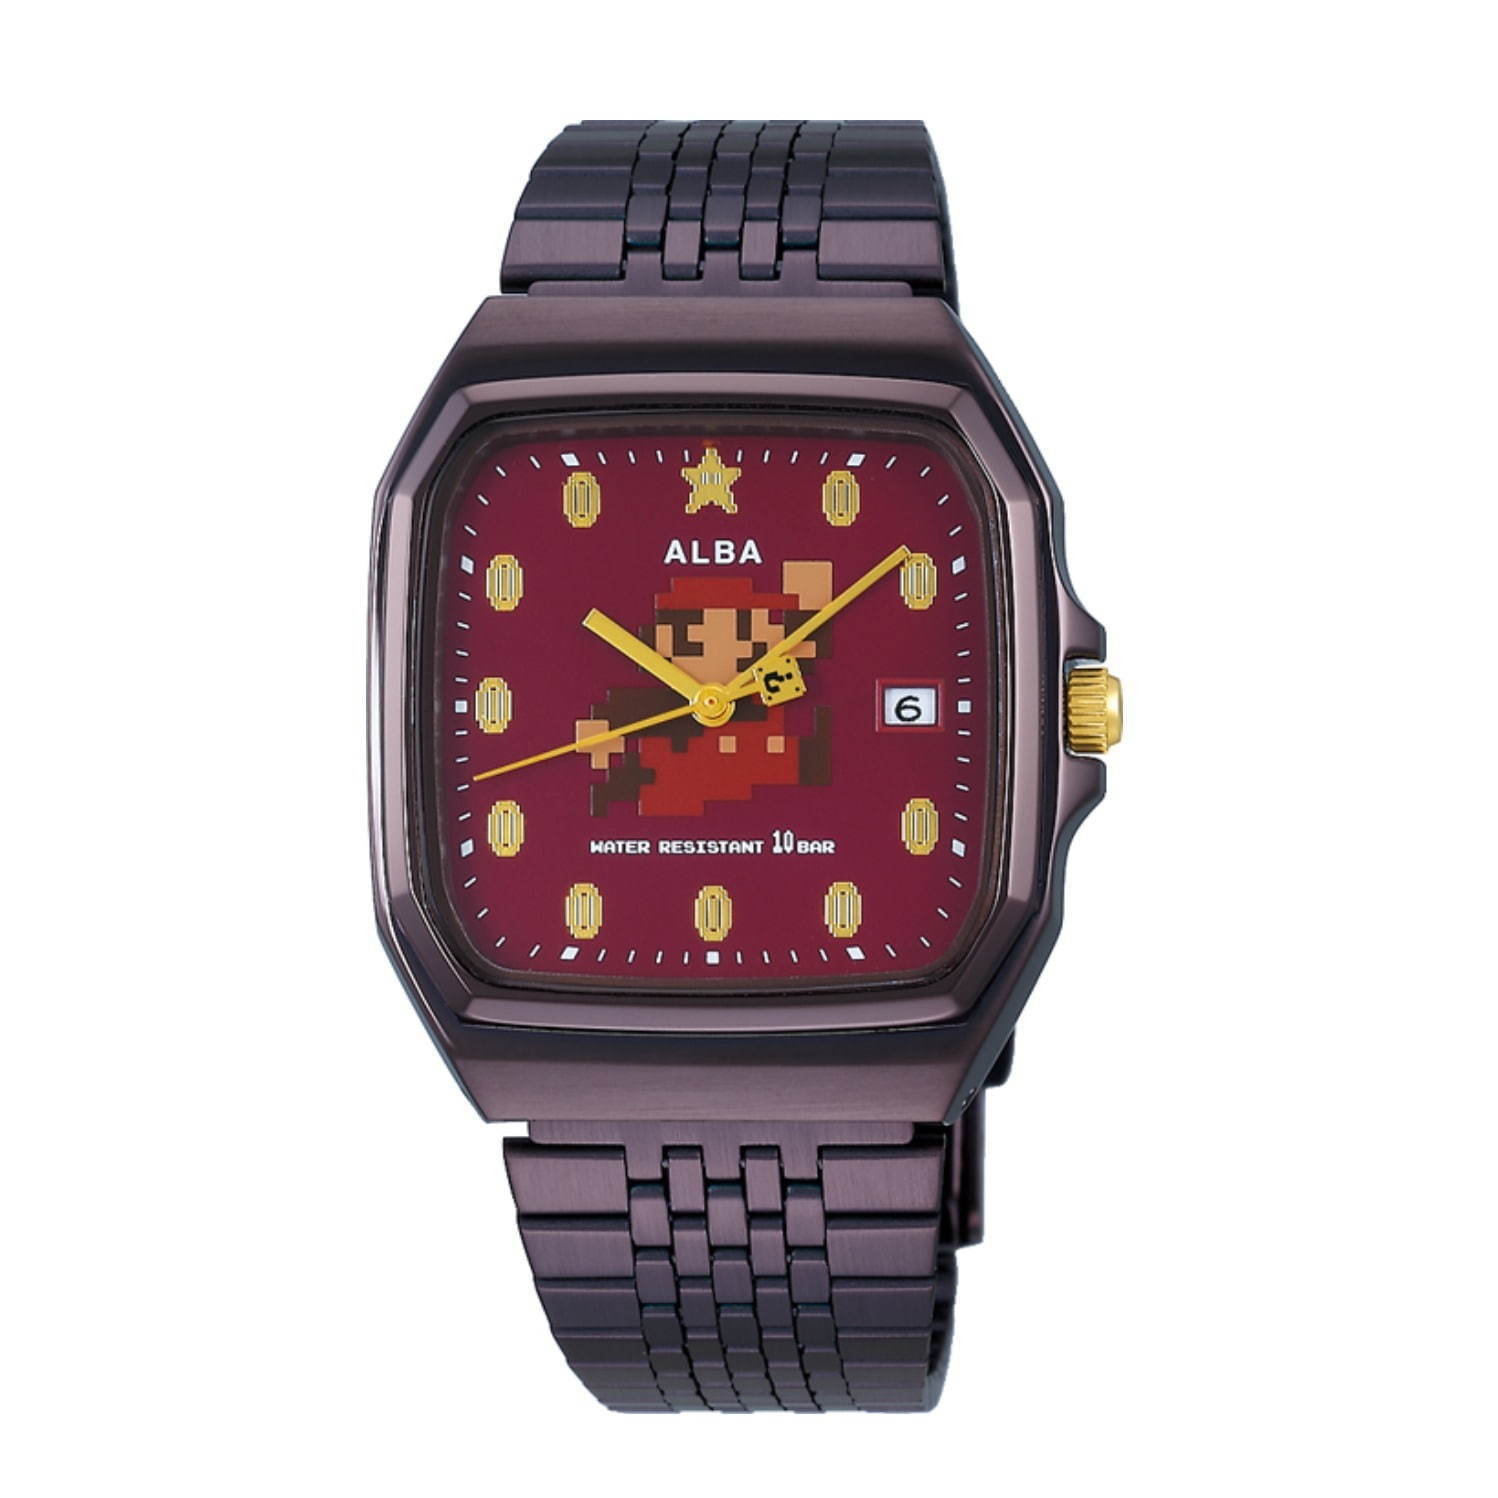 SEIKO ALBA スーパーマリオ コラボ ACCK711 腕時計 - 腕時計(デジタル)